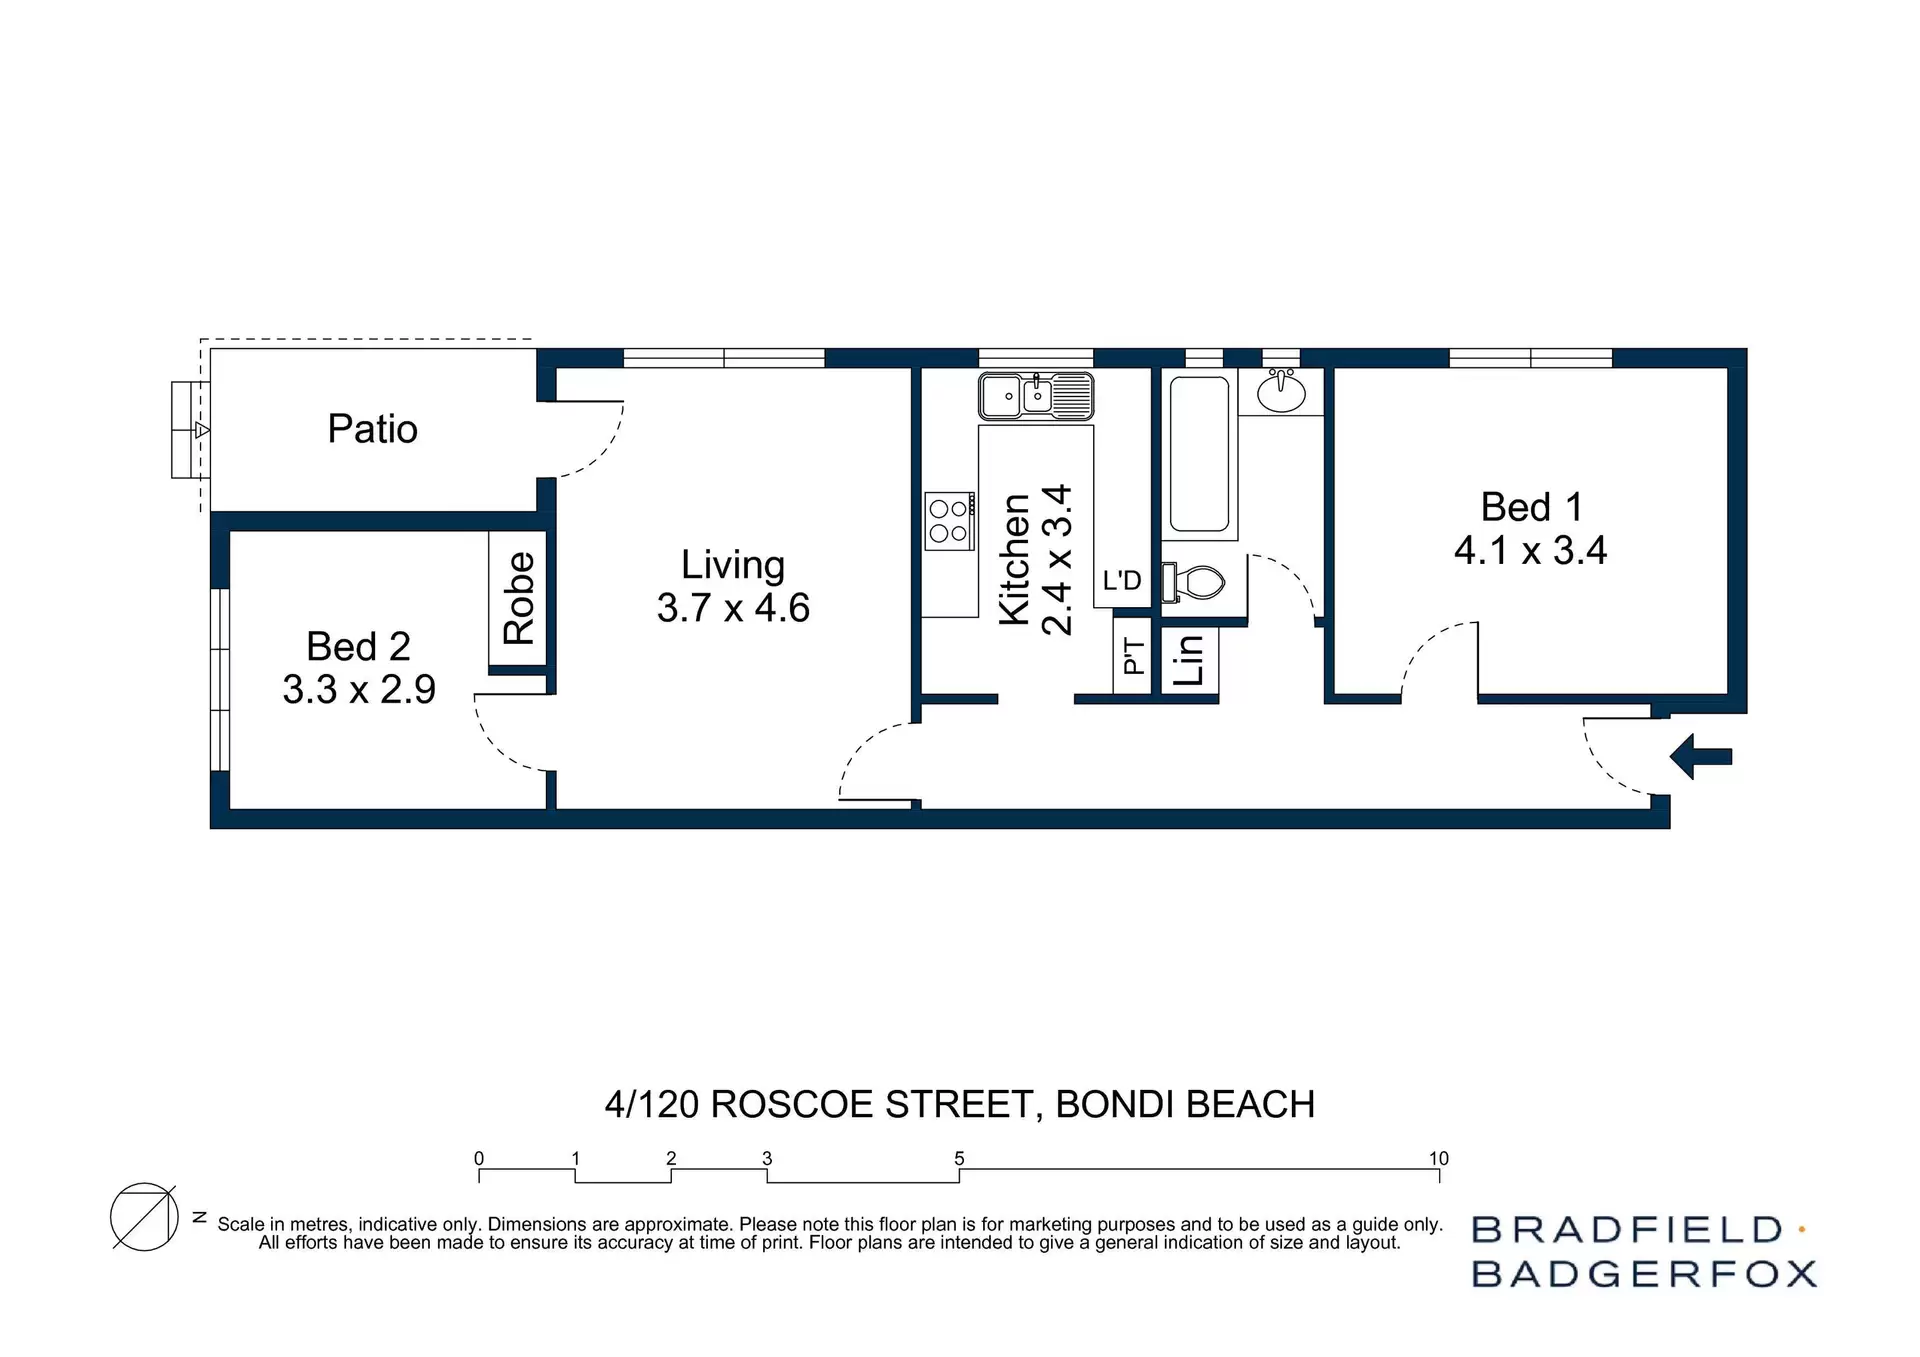 4/120 Roscoe Street, Bondi Beach Sold by Bradfield Badgerfox - image 1